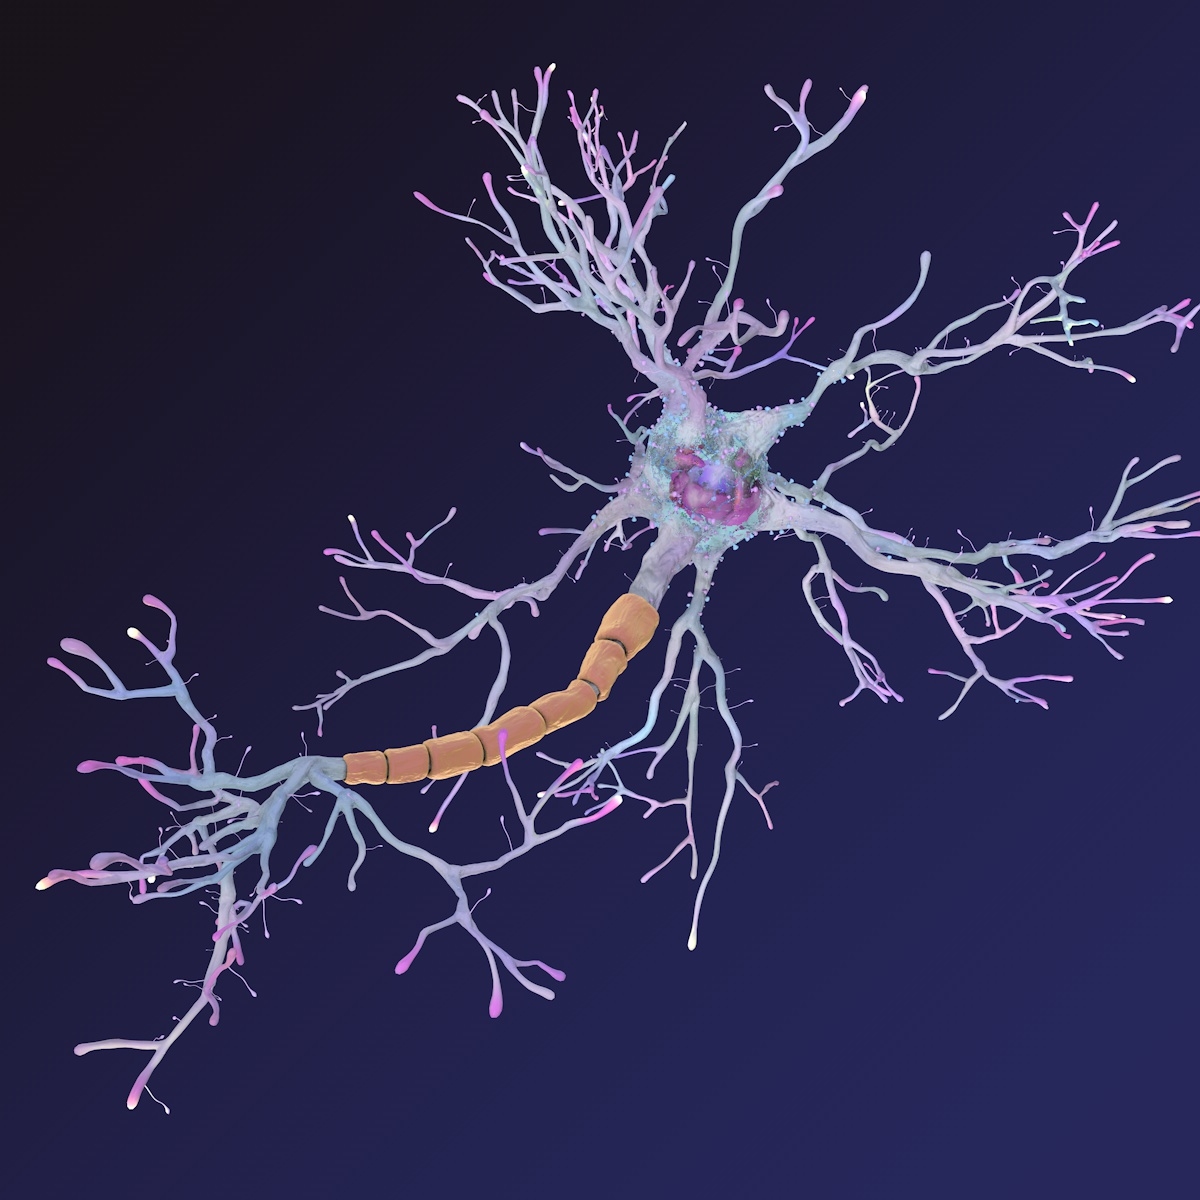 Neuron synapses receptors 3D model TurboSquid 1184448